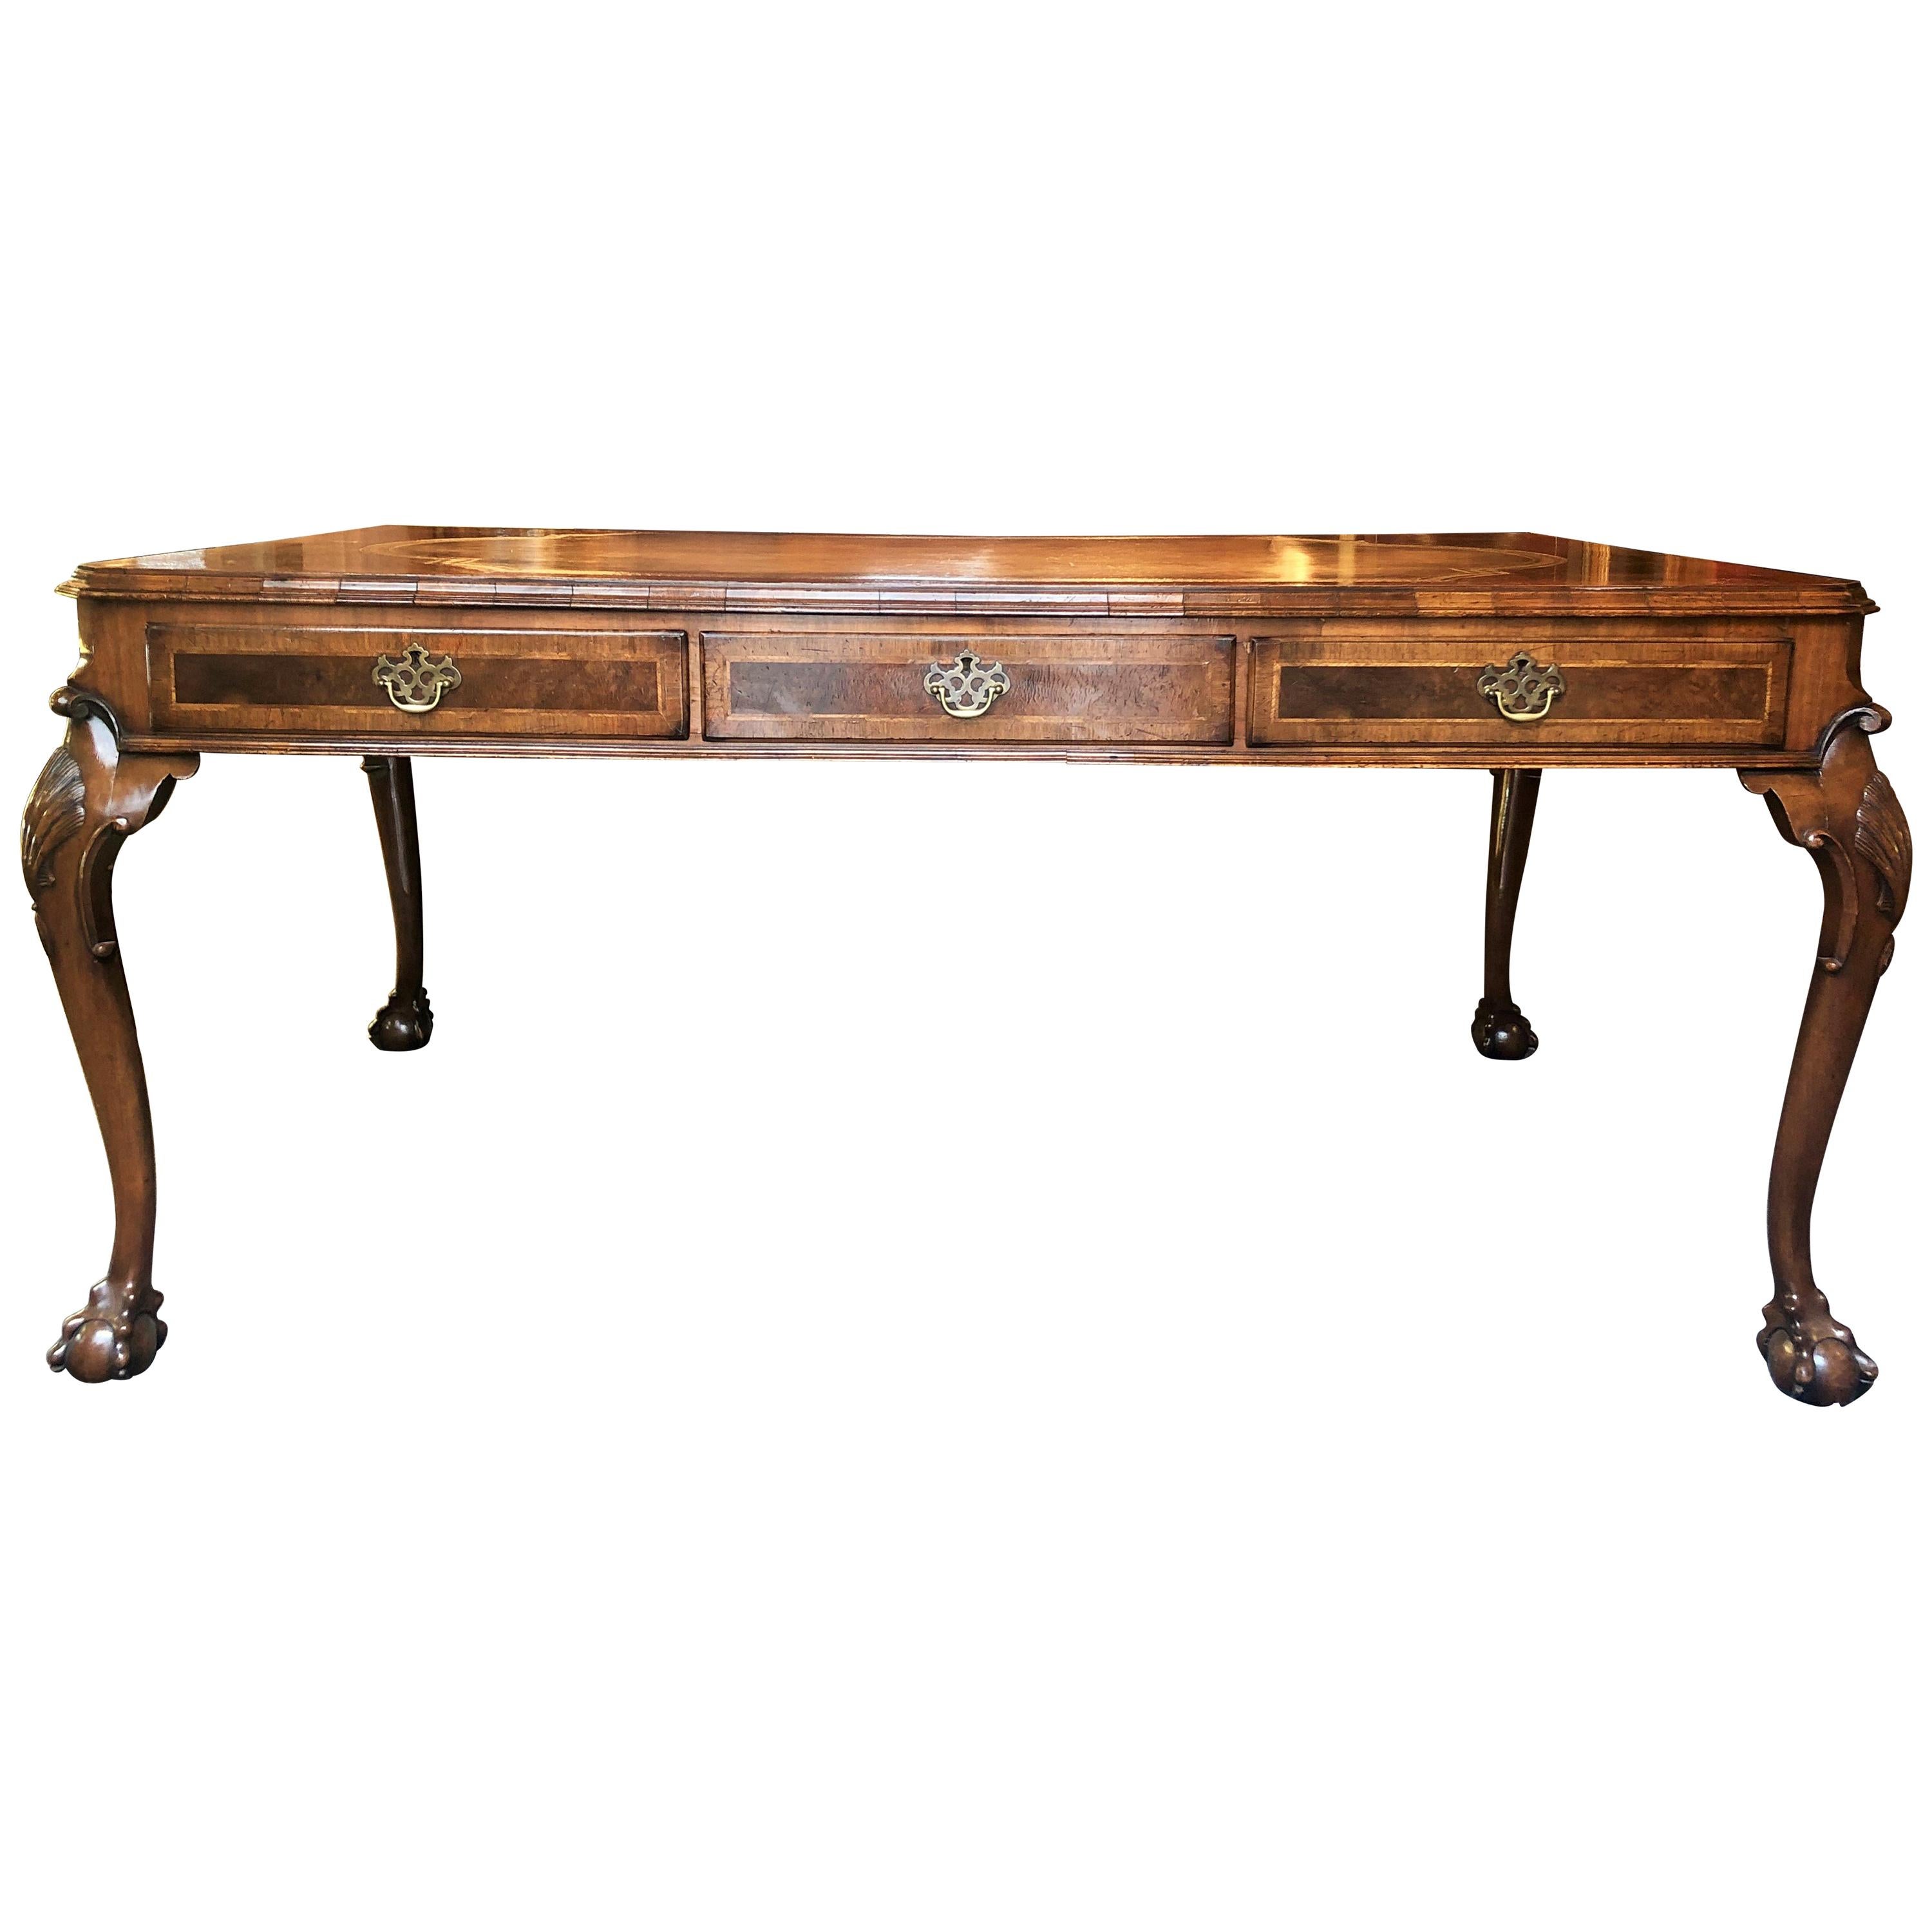 Antique English Walnut Queen Anne Table Desk, circa 1900-1910